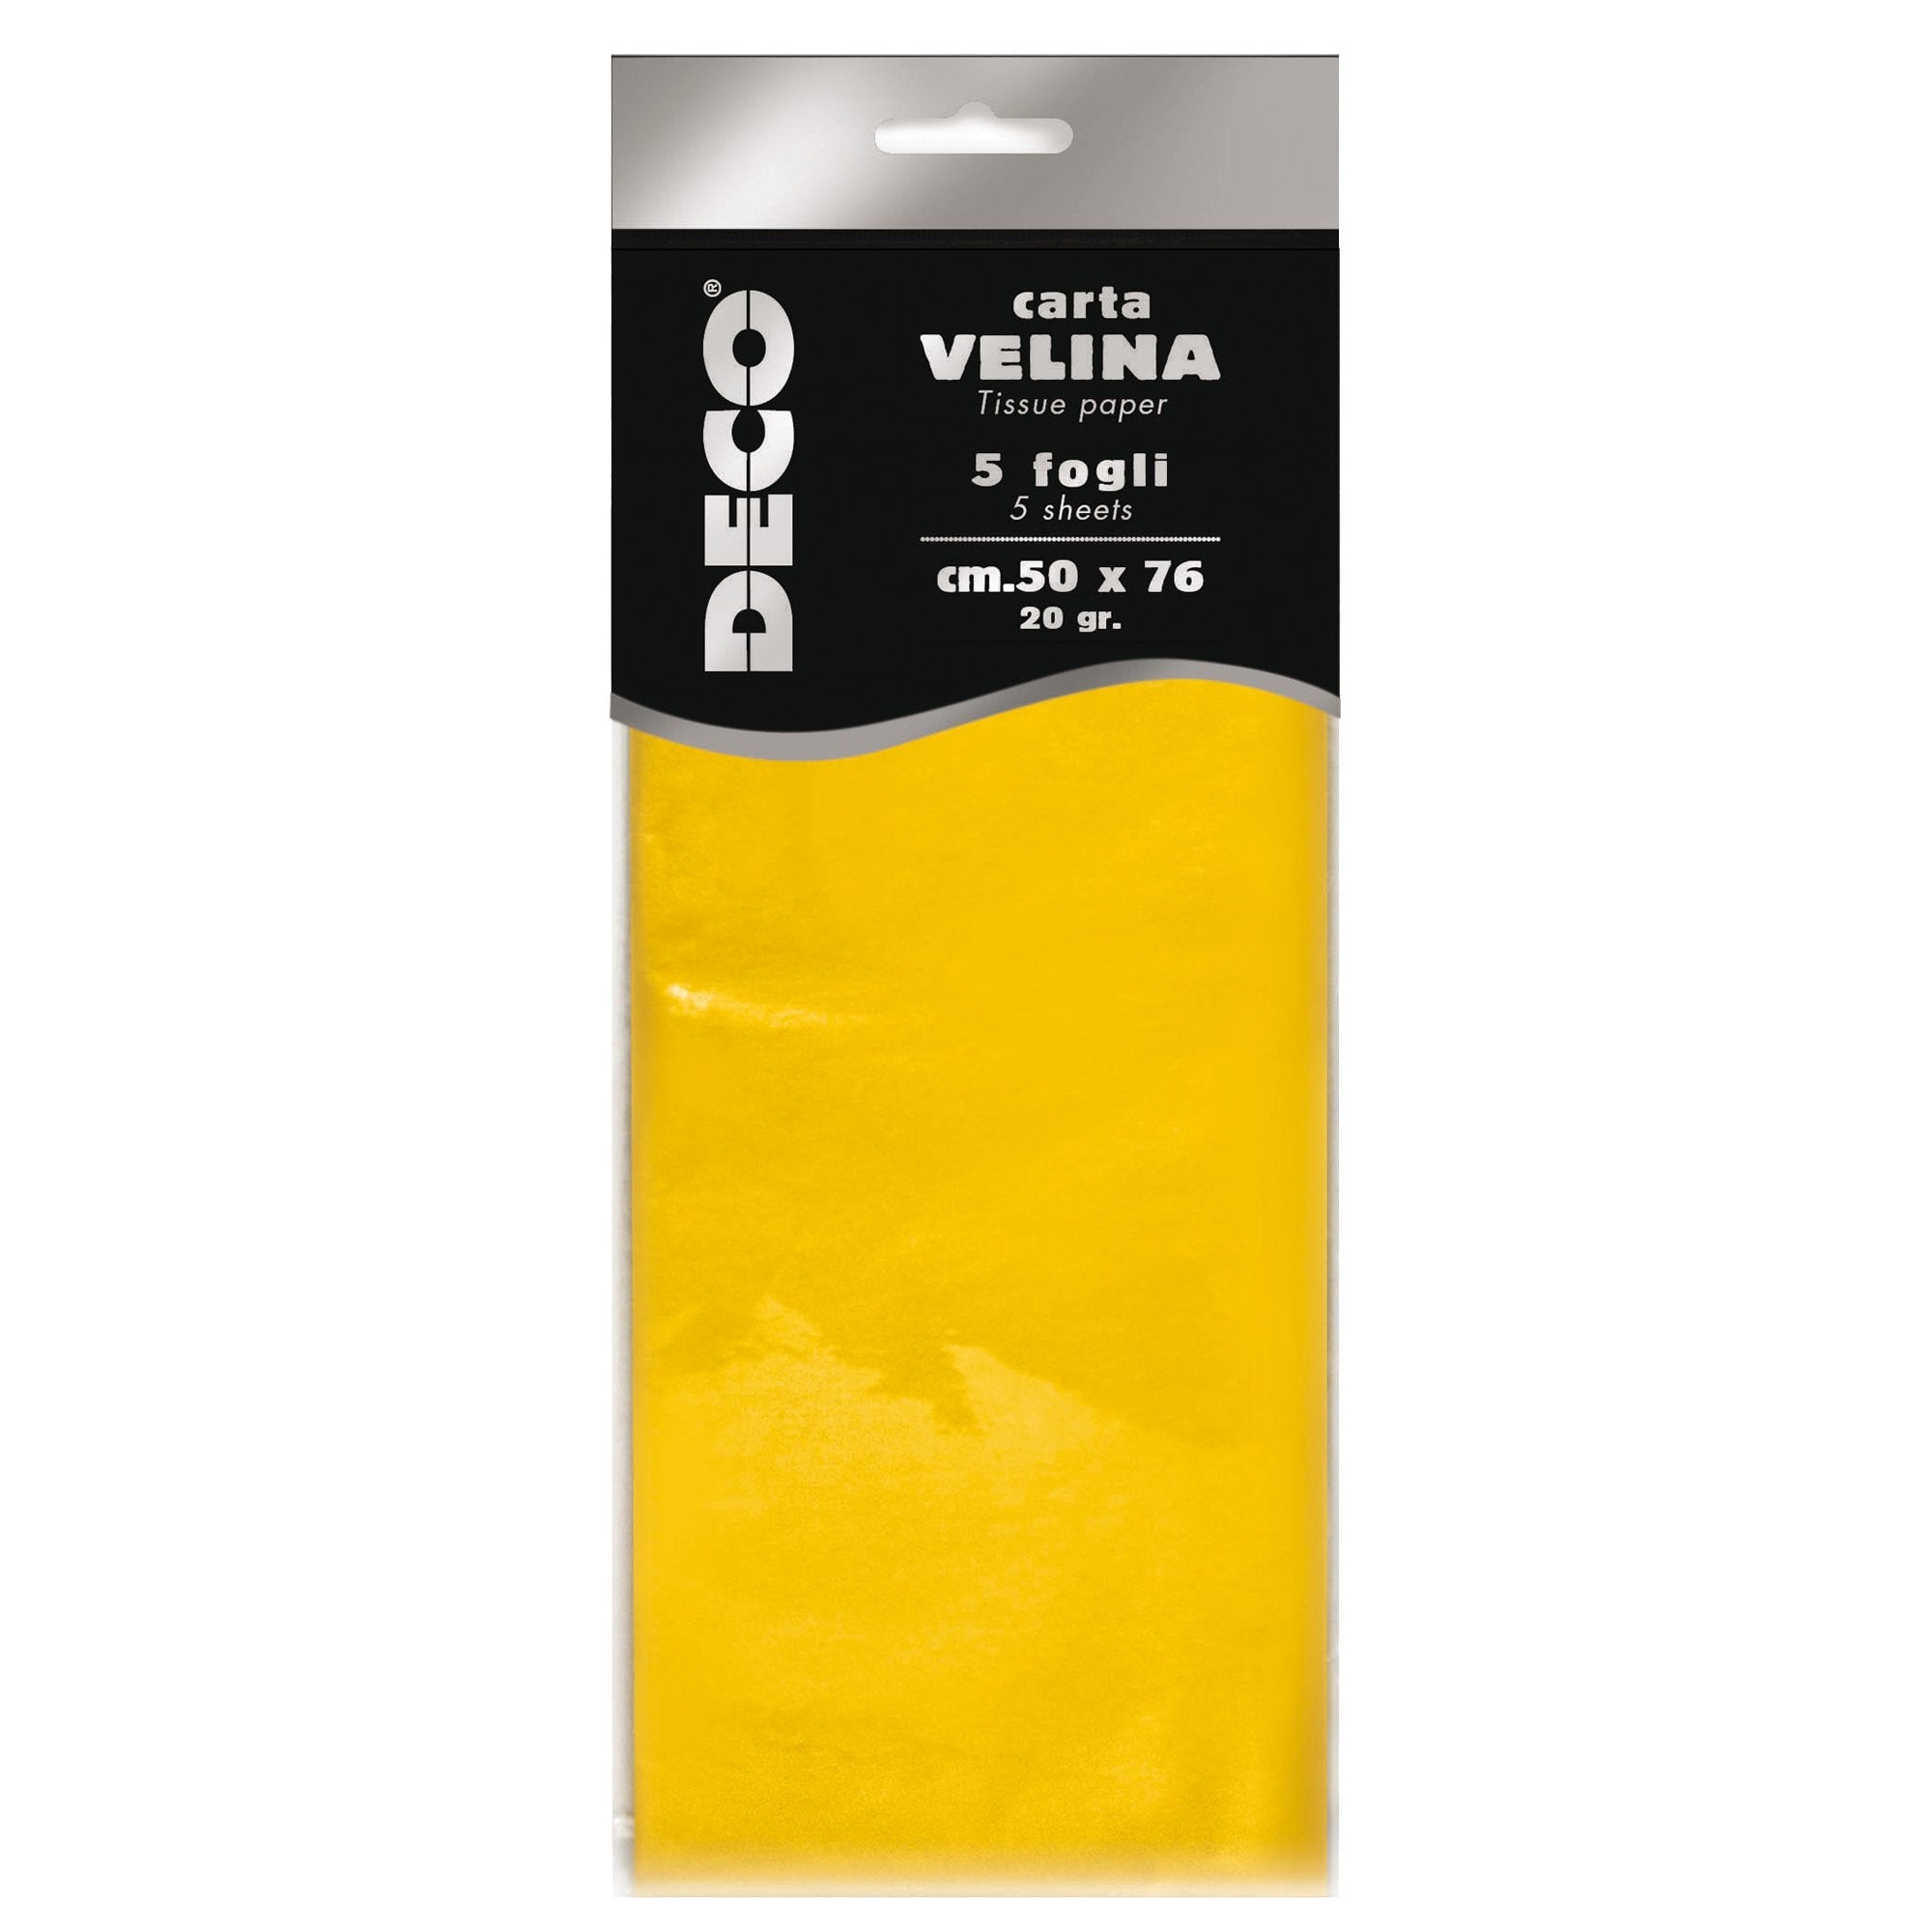 deco-busta-5-fogli-carta-velina-20gr-50x76cm-giallo